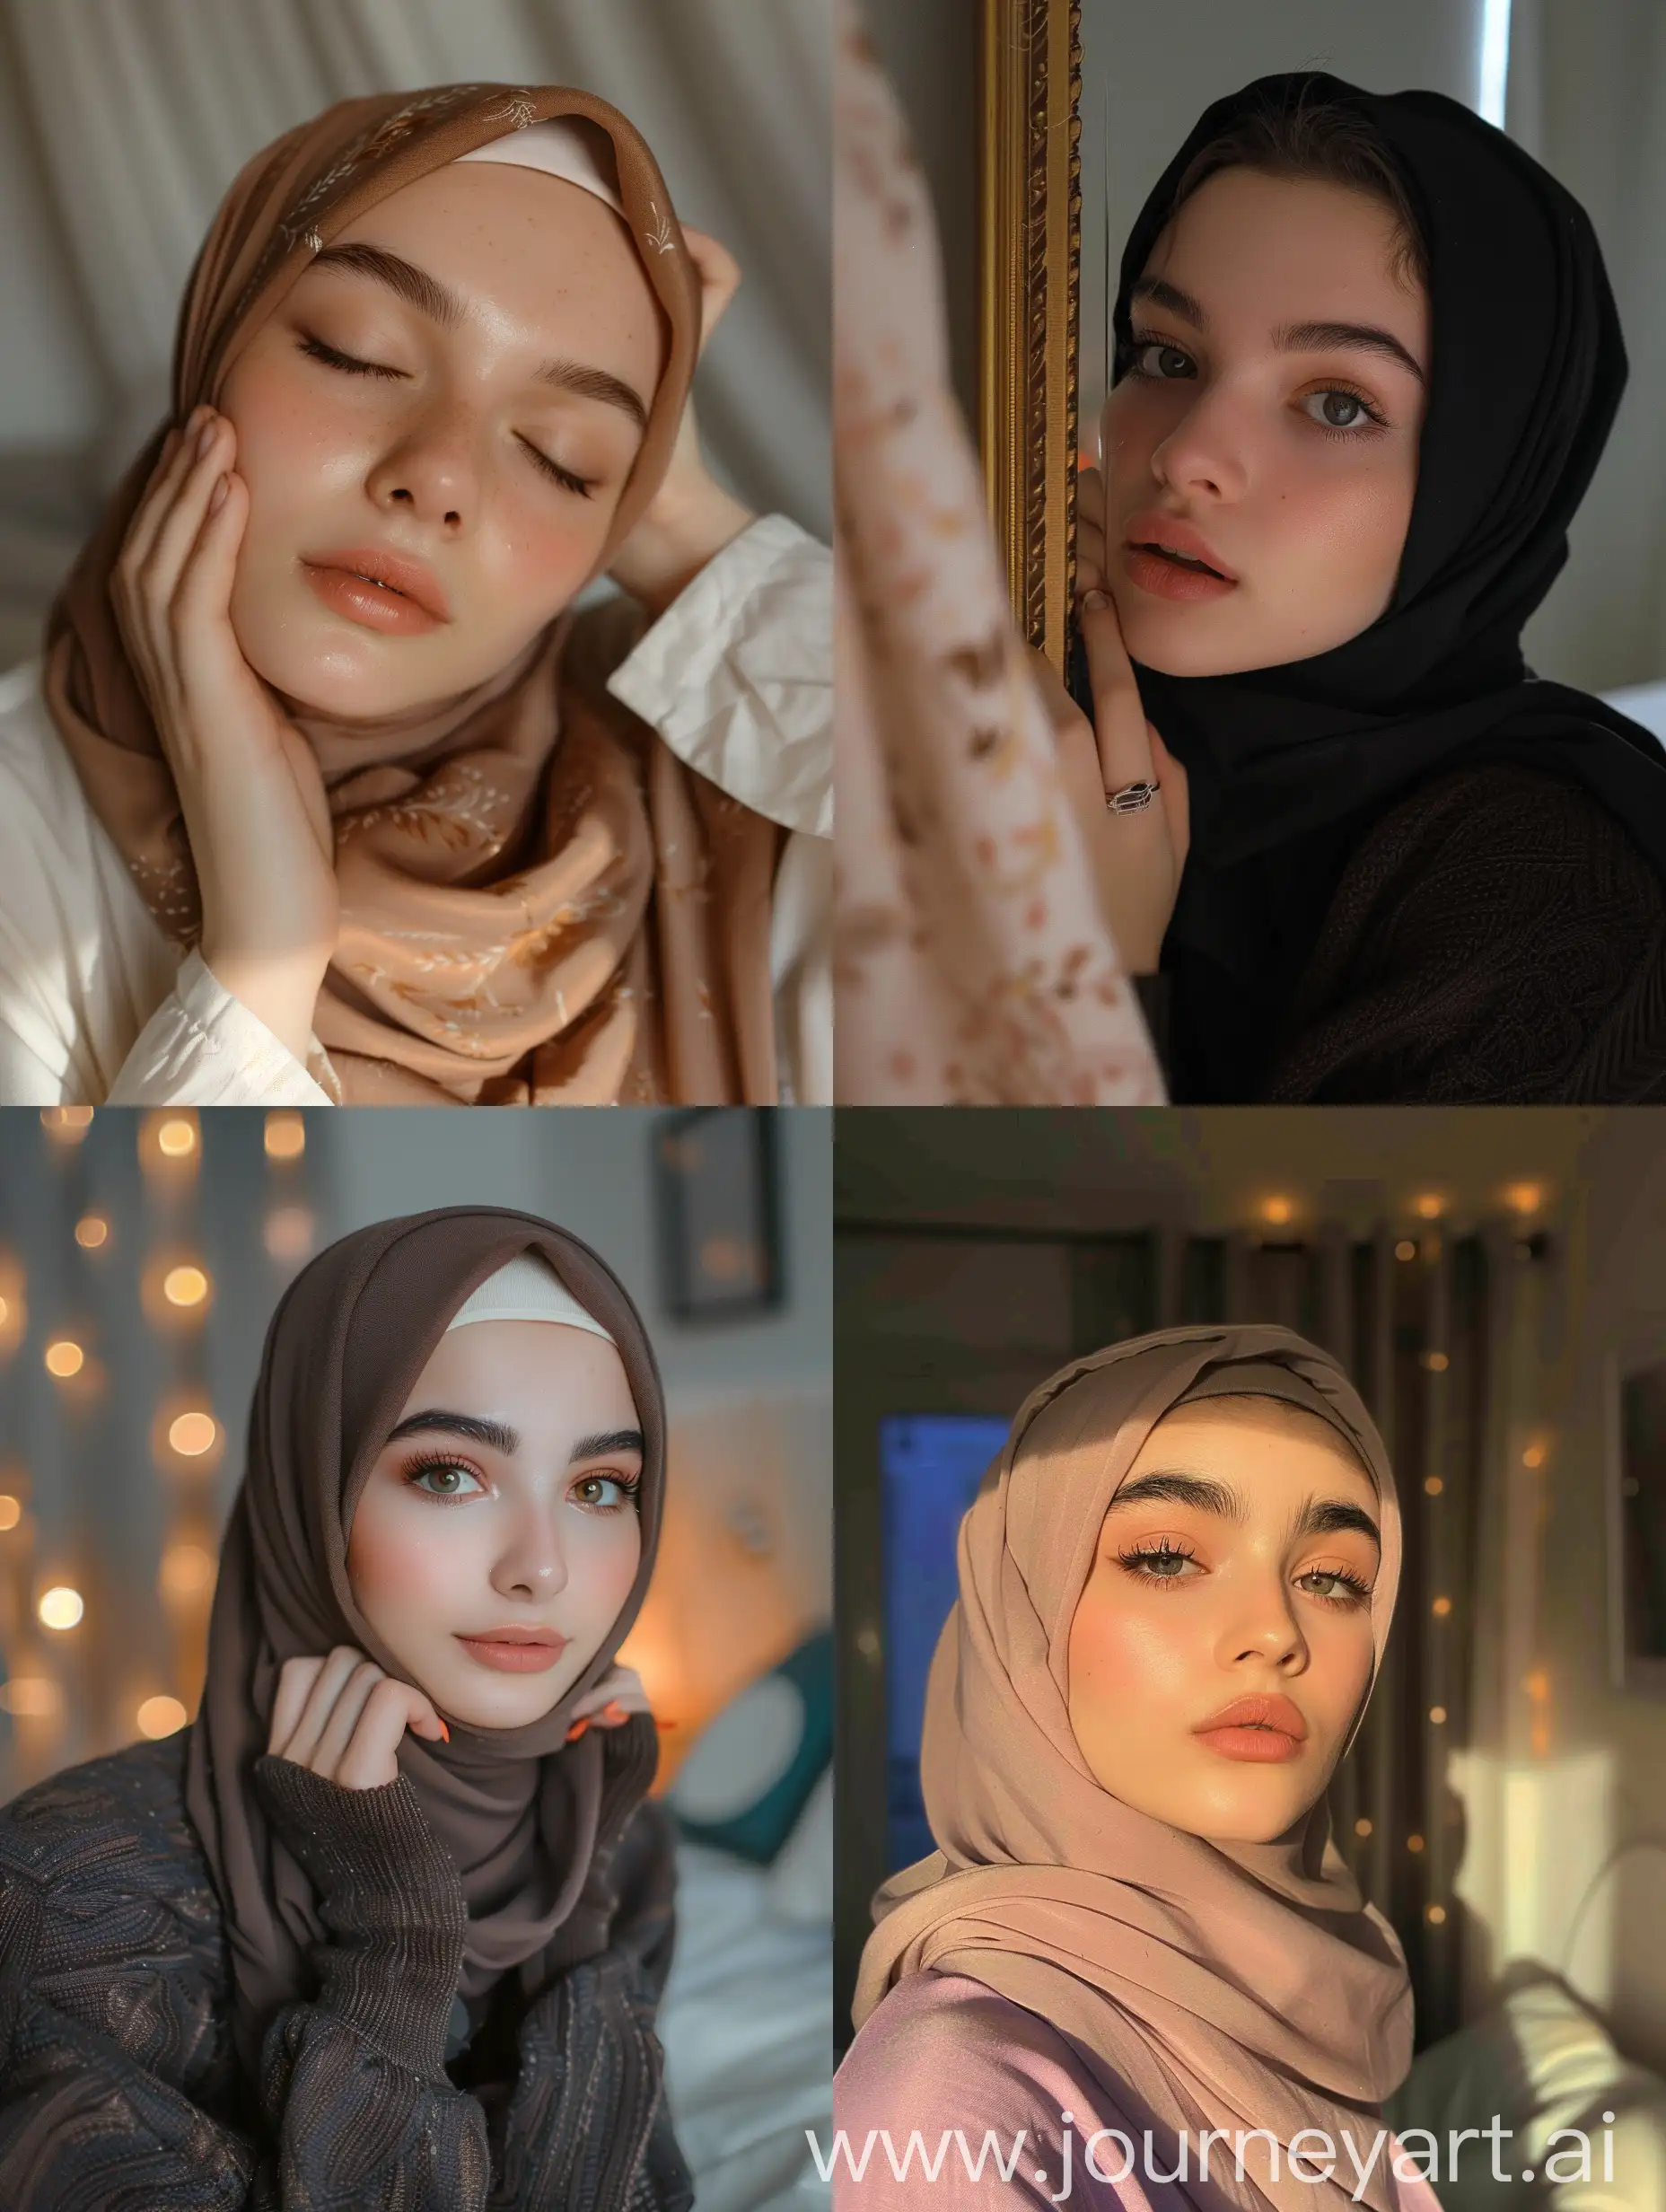 Muslim-Teenage-Girl-in-Bedroom-Getting-Ready-for-Bed